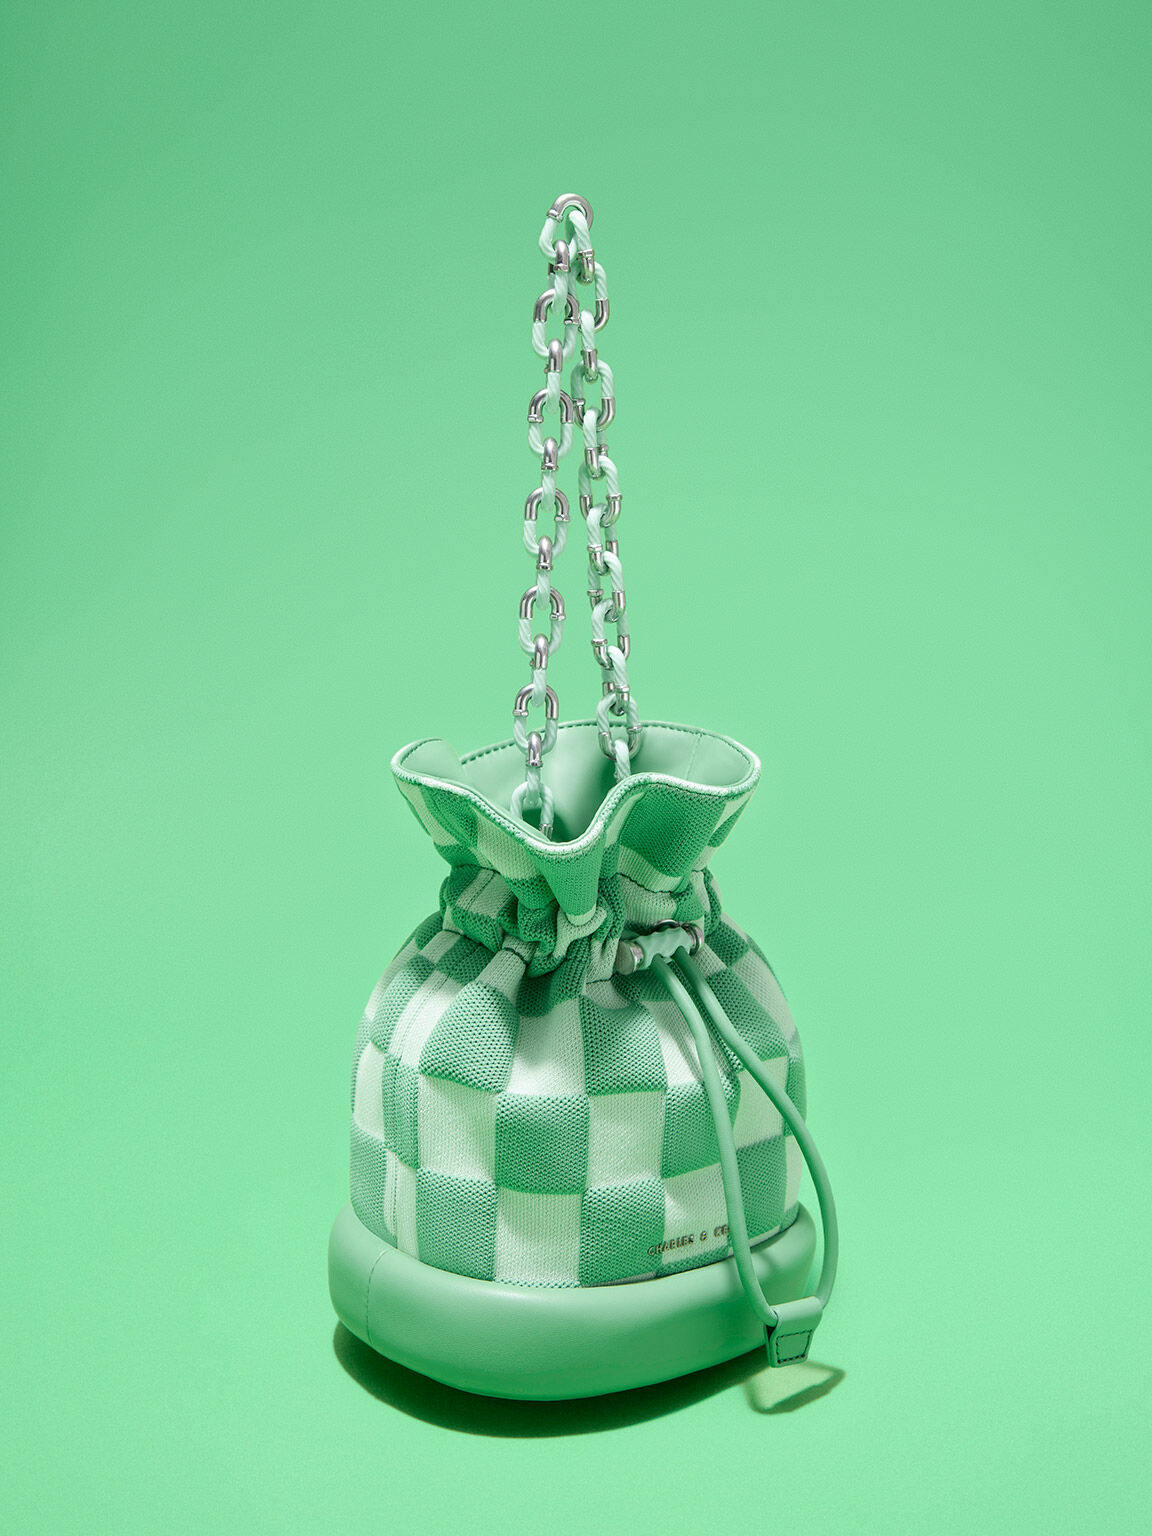 Shiloh Checkerboard Drawstring Bucket Bag, Green, hi-res